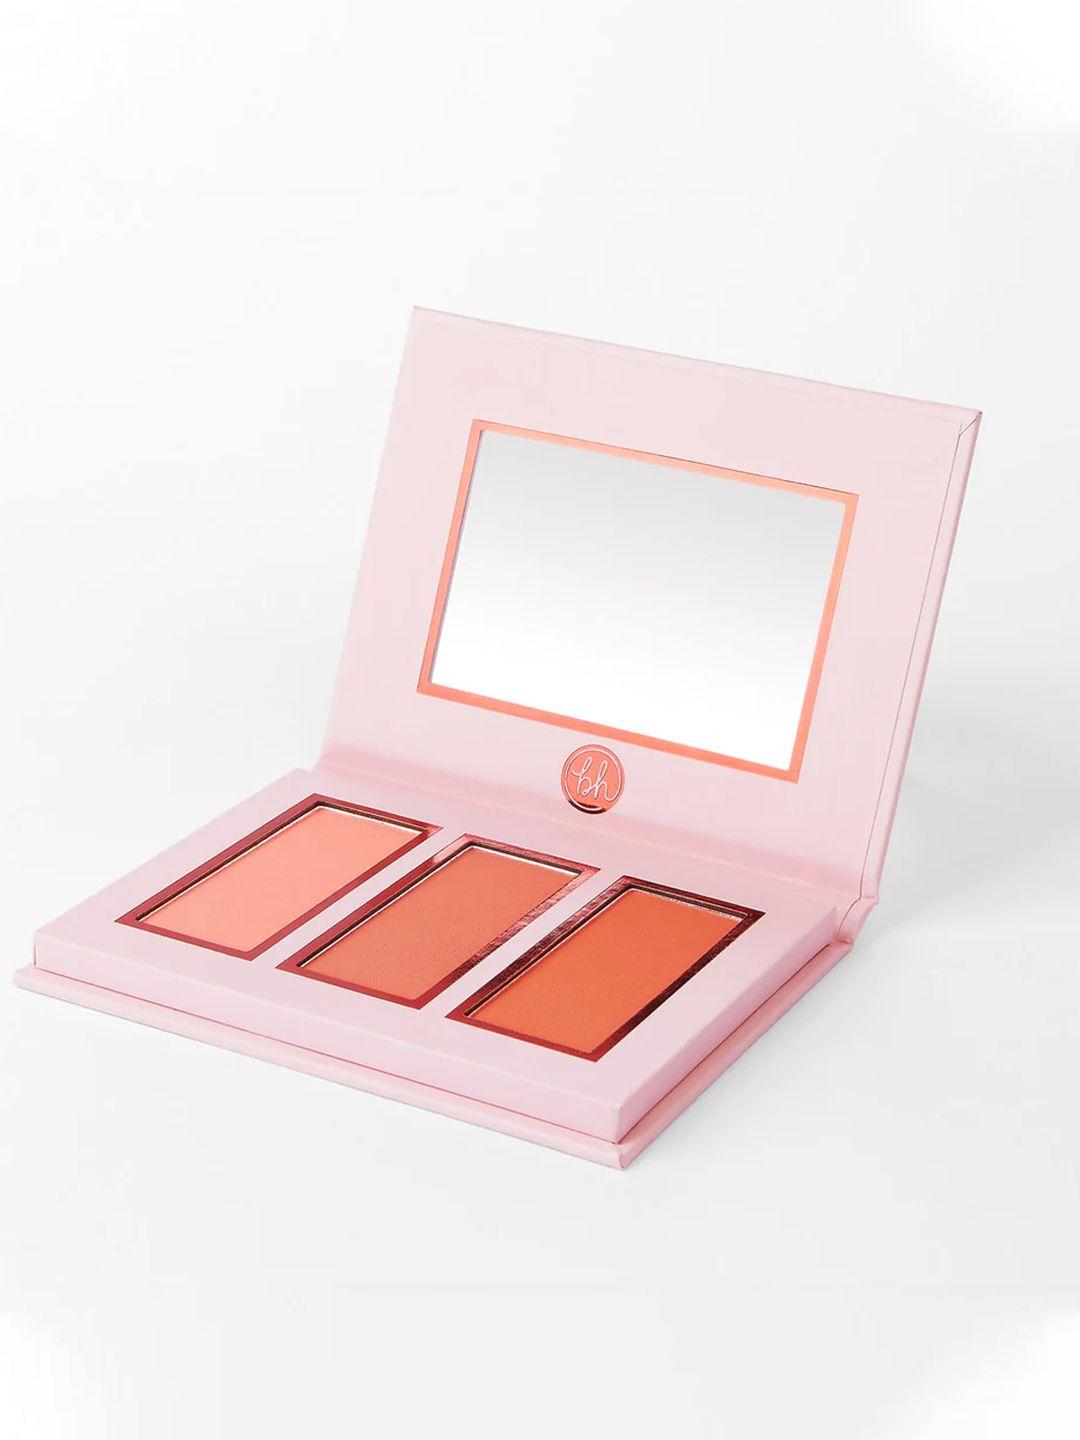 bh cosmetics mrs. bella 3-color high-pigmented blush trio 11g - peachy